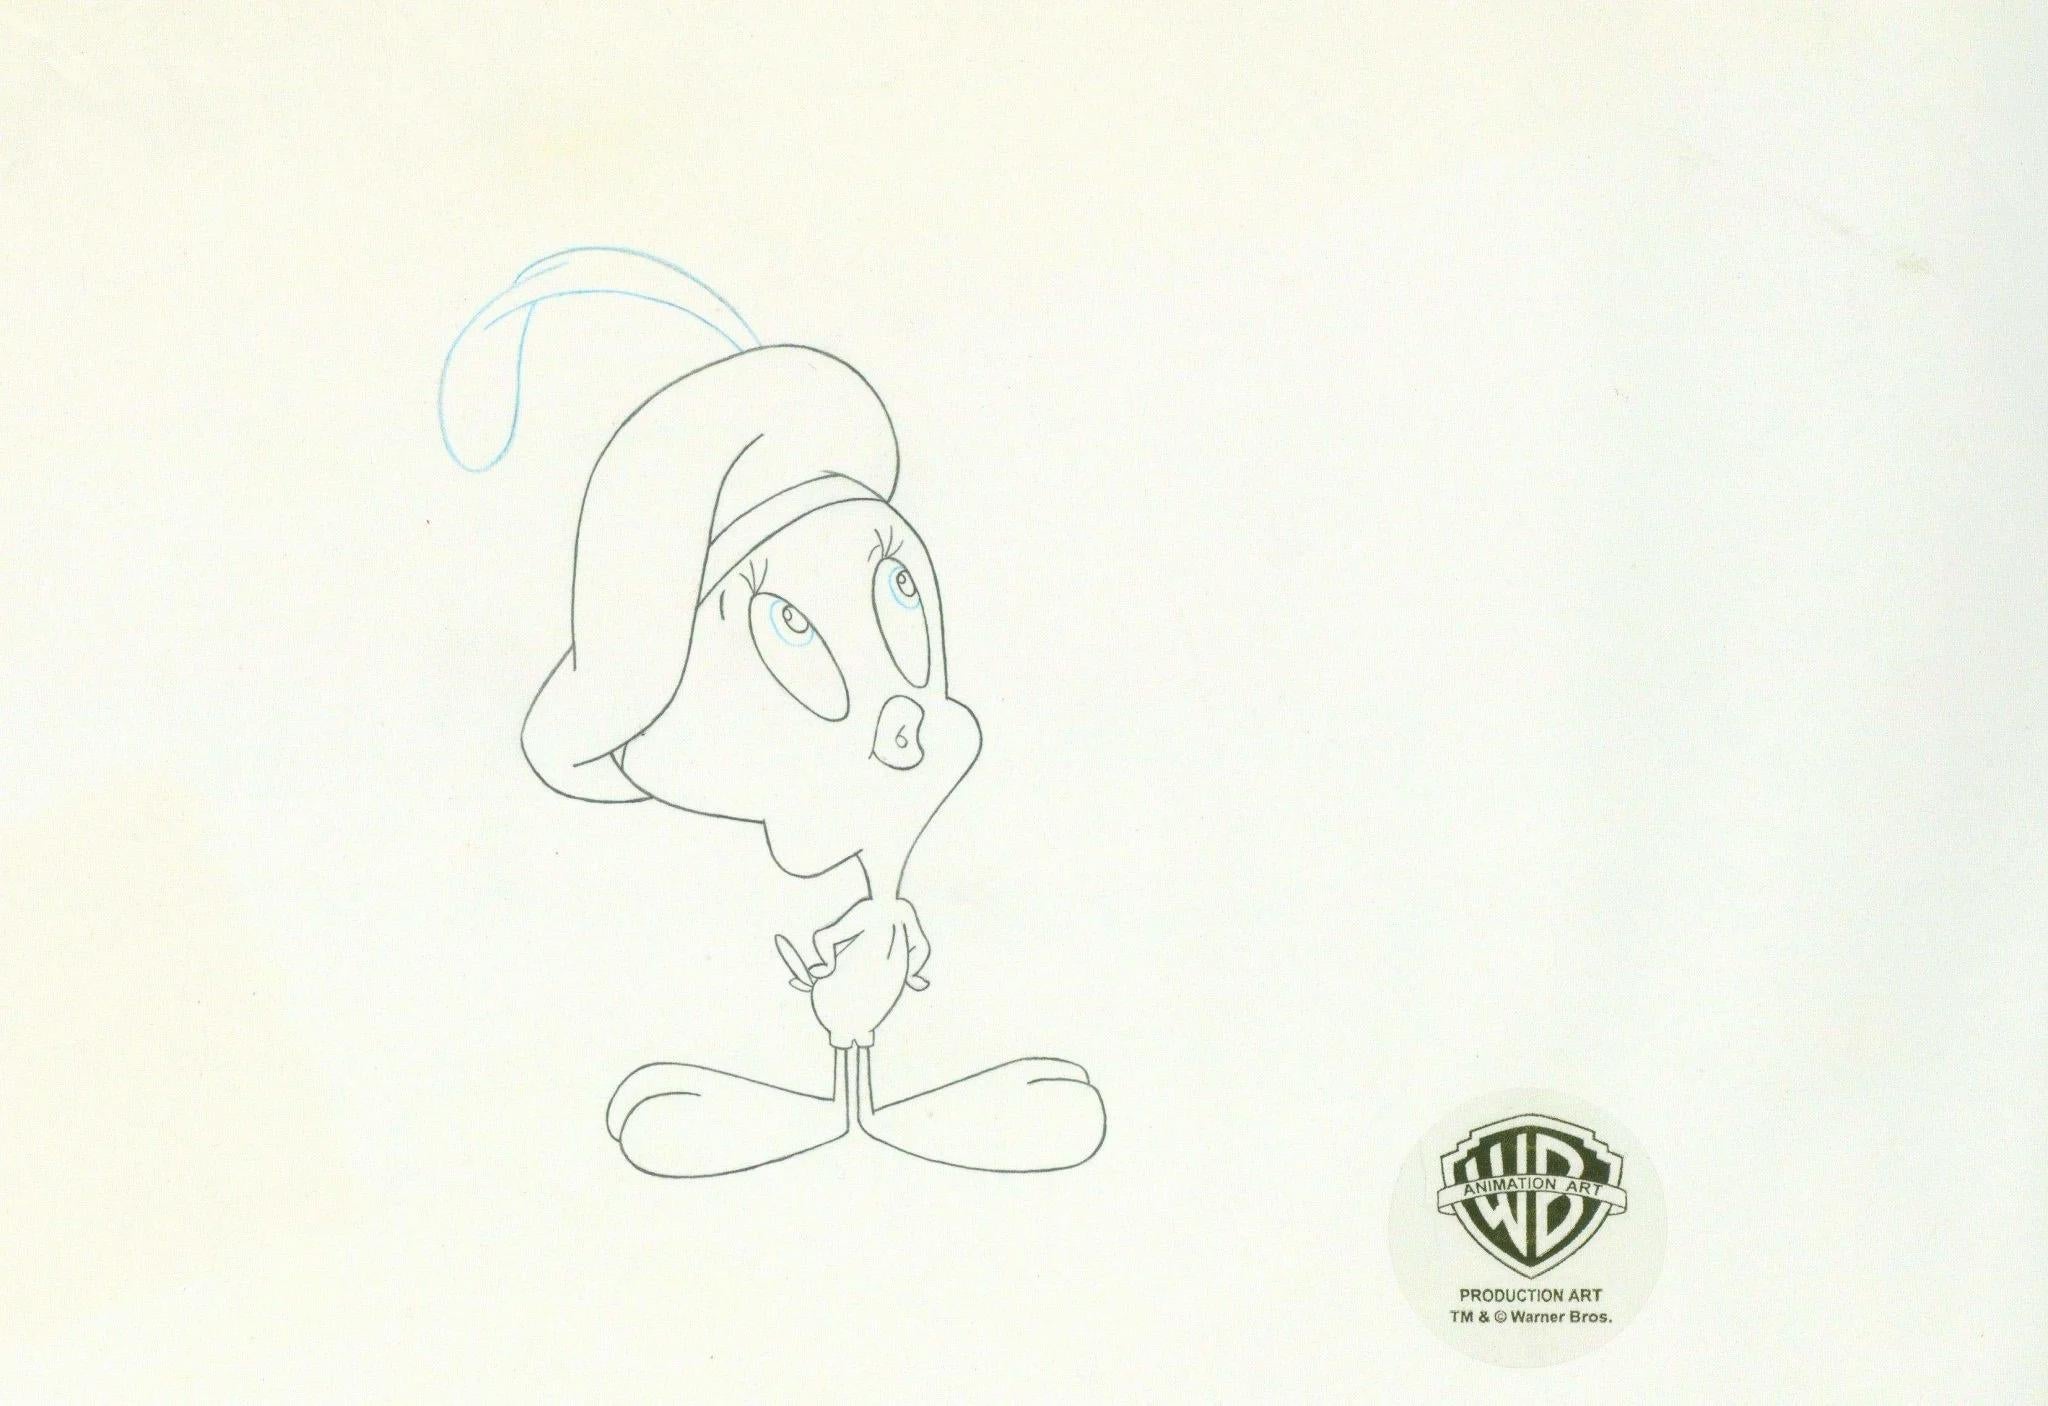 Looney Tunes Original Production Drawing: Tweety Bird - Art by Looney Tunes Studio Artists